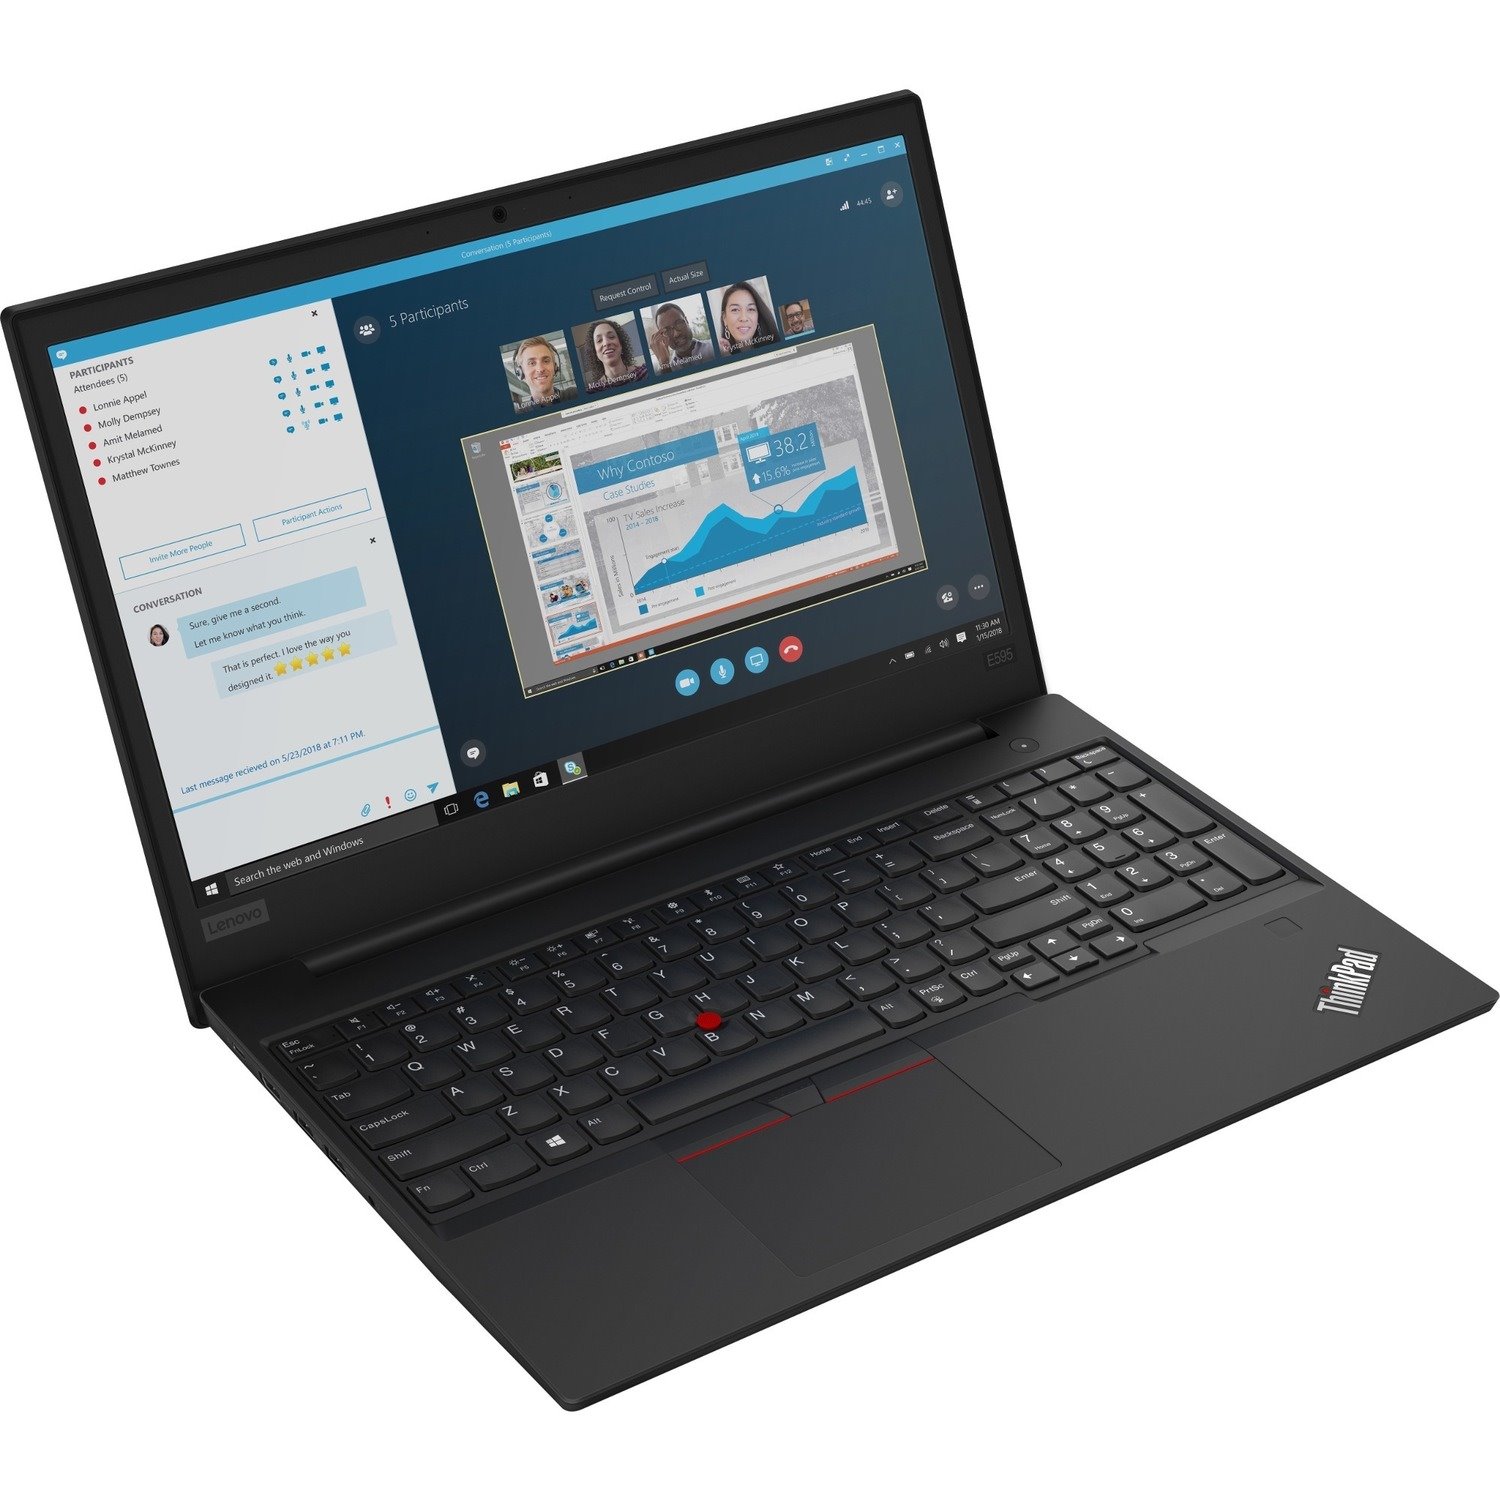 Lenovo ThinkPad E595 20NF0018US 15.6" Notebook - 1920 x 1080 - AMD Ryzen 7 3700U Quad-core (4 Core) 2.30 GHz - 8 GB Total RAM - 256 GB SSD - Glossy Black